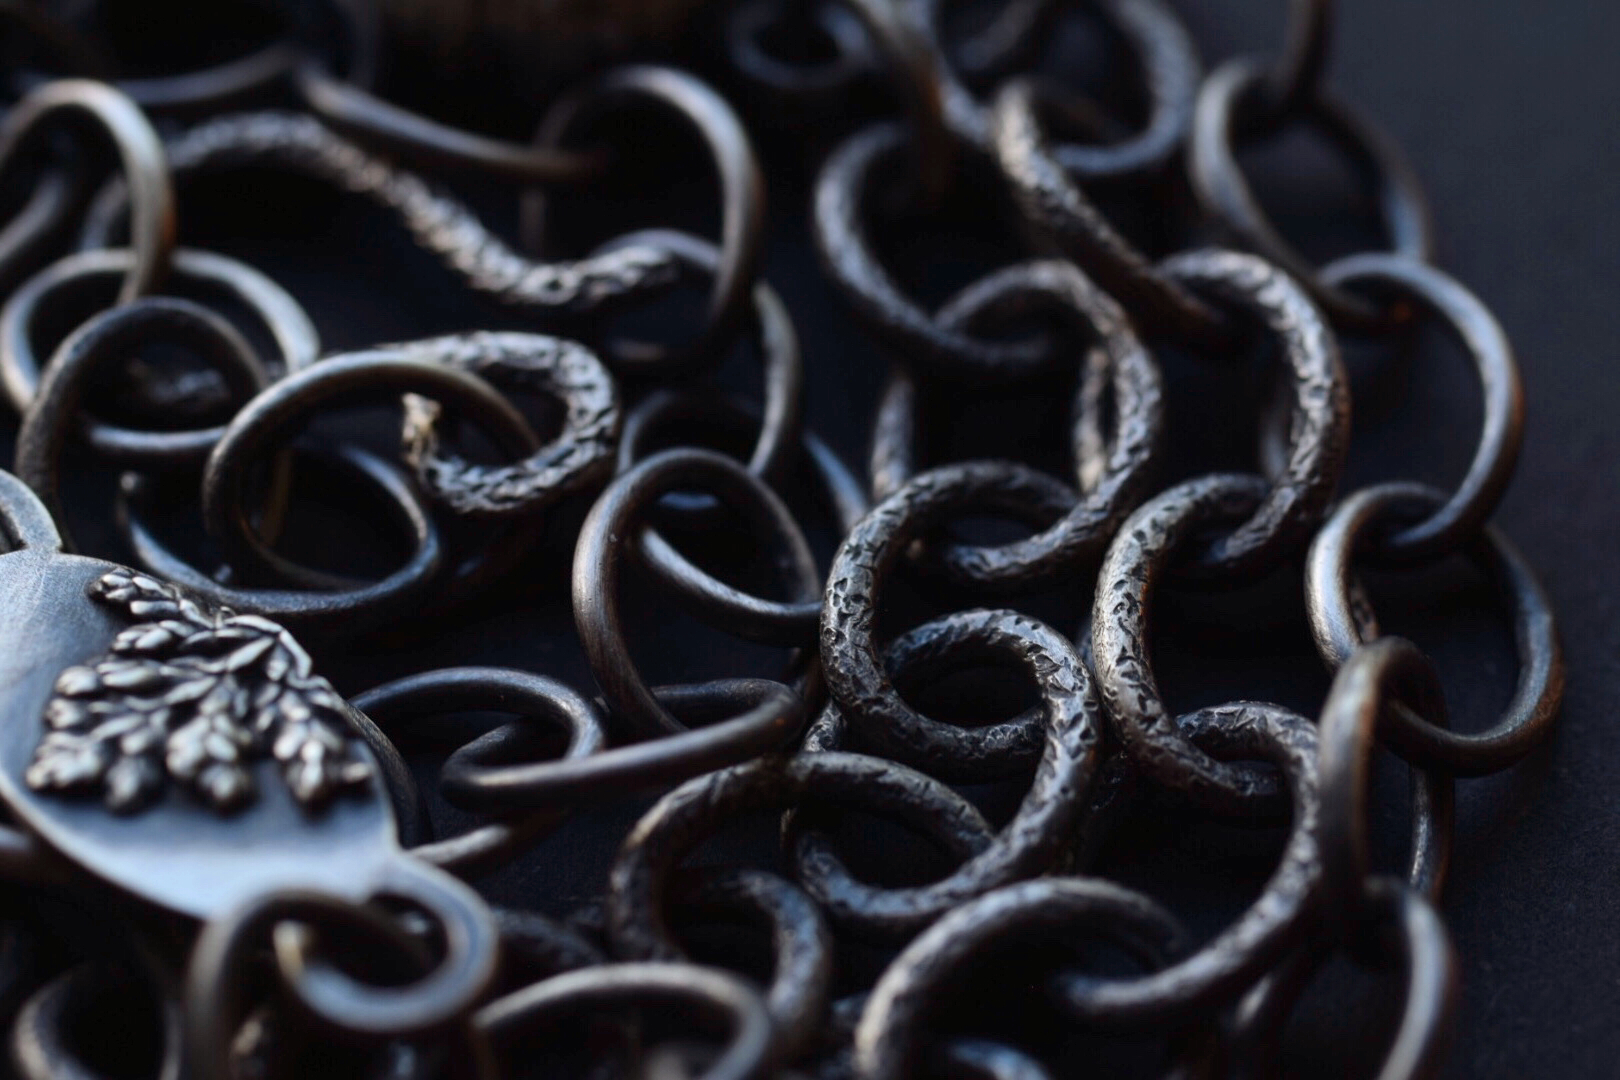 Handmade Chain with Vesuvianite & Fern Accents